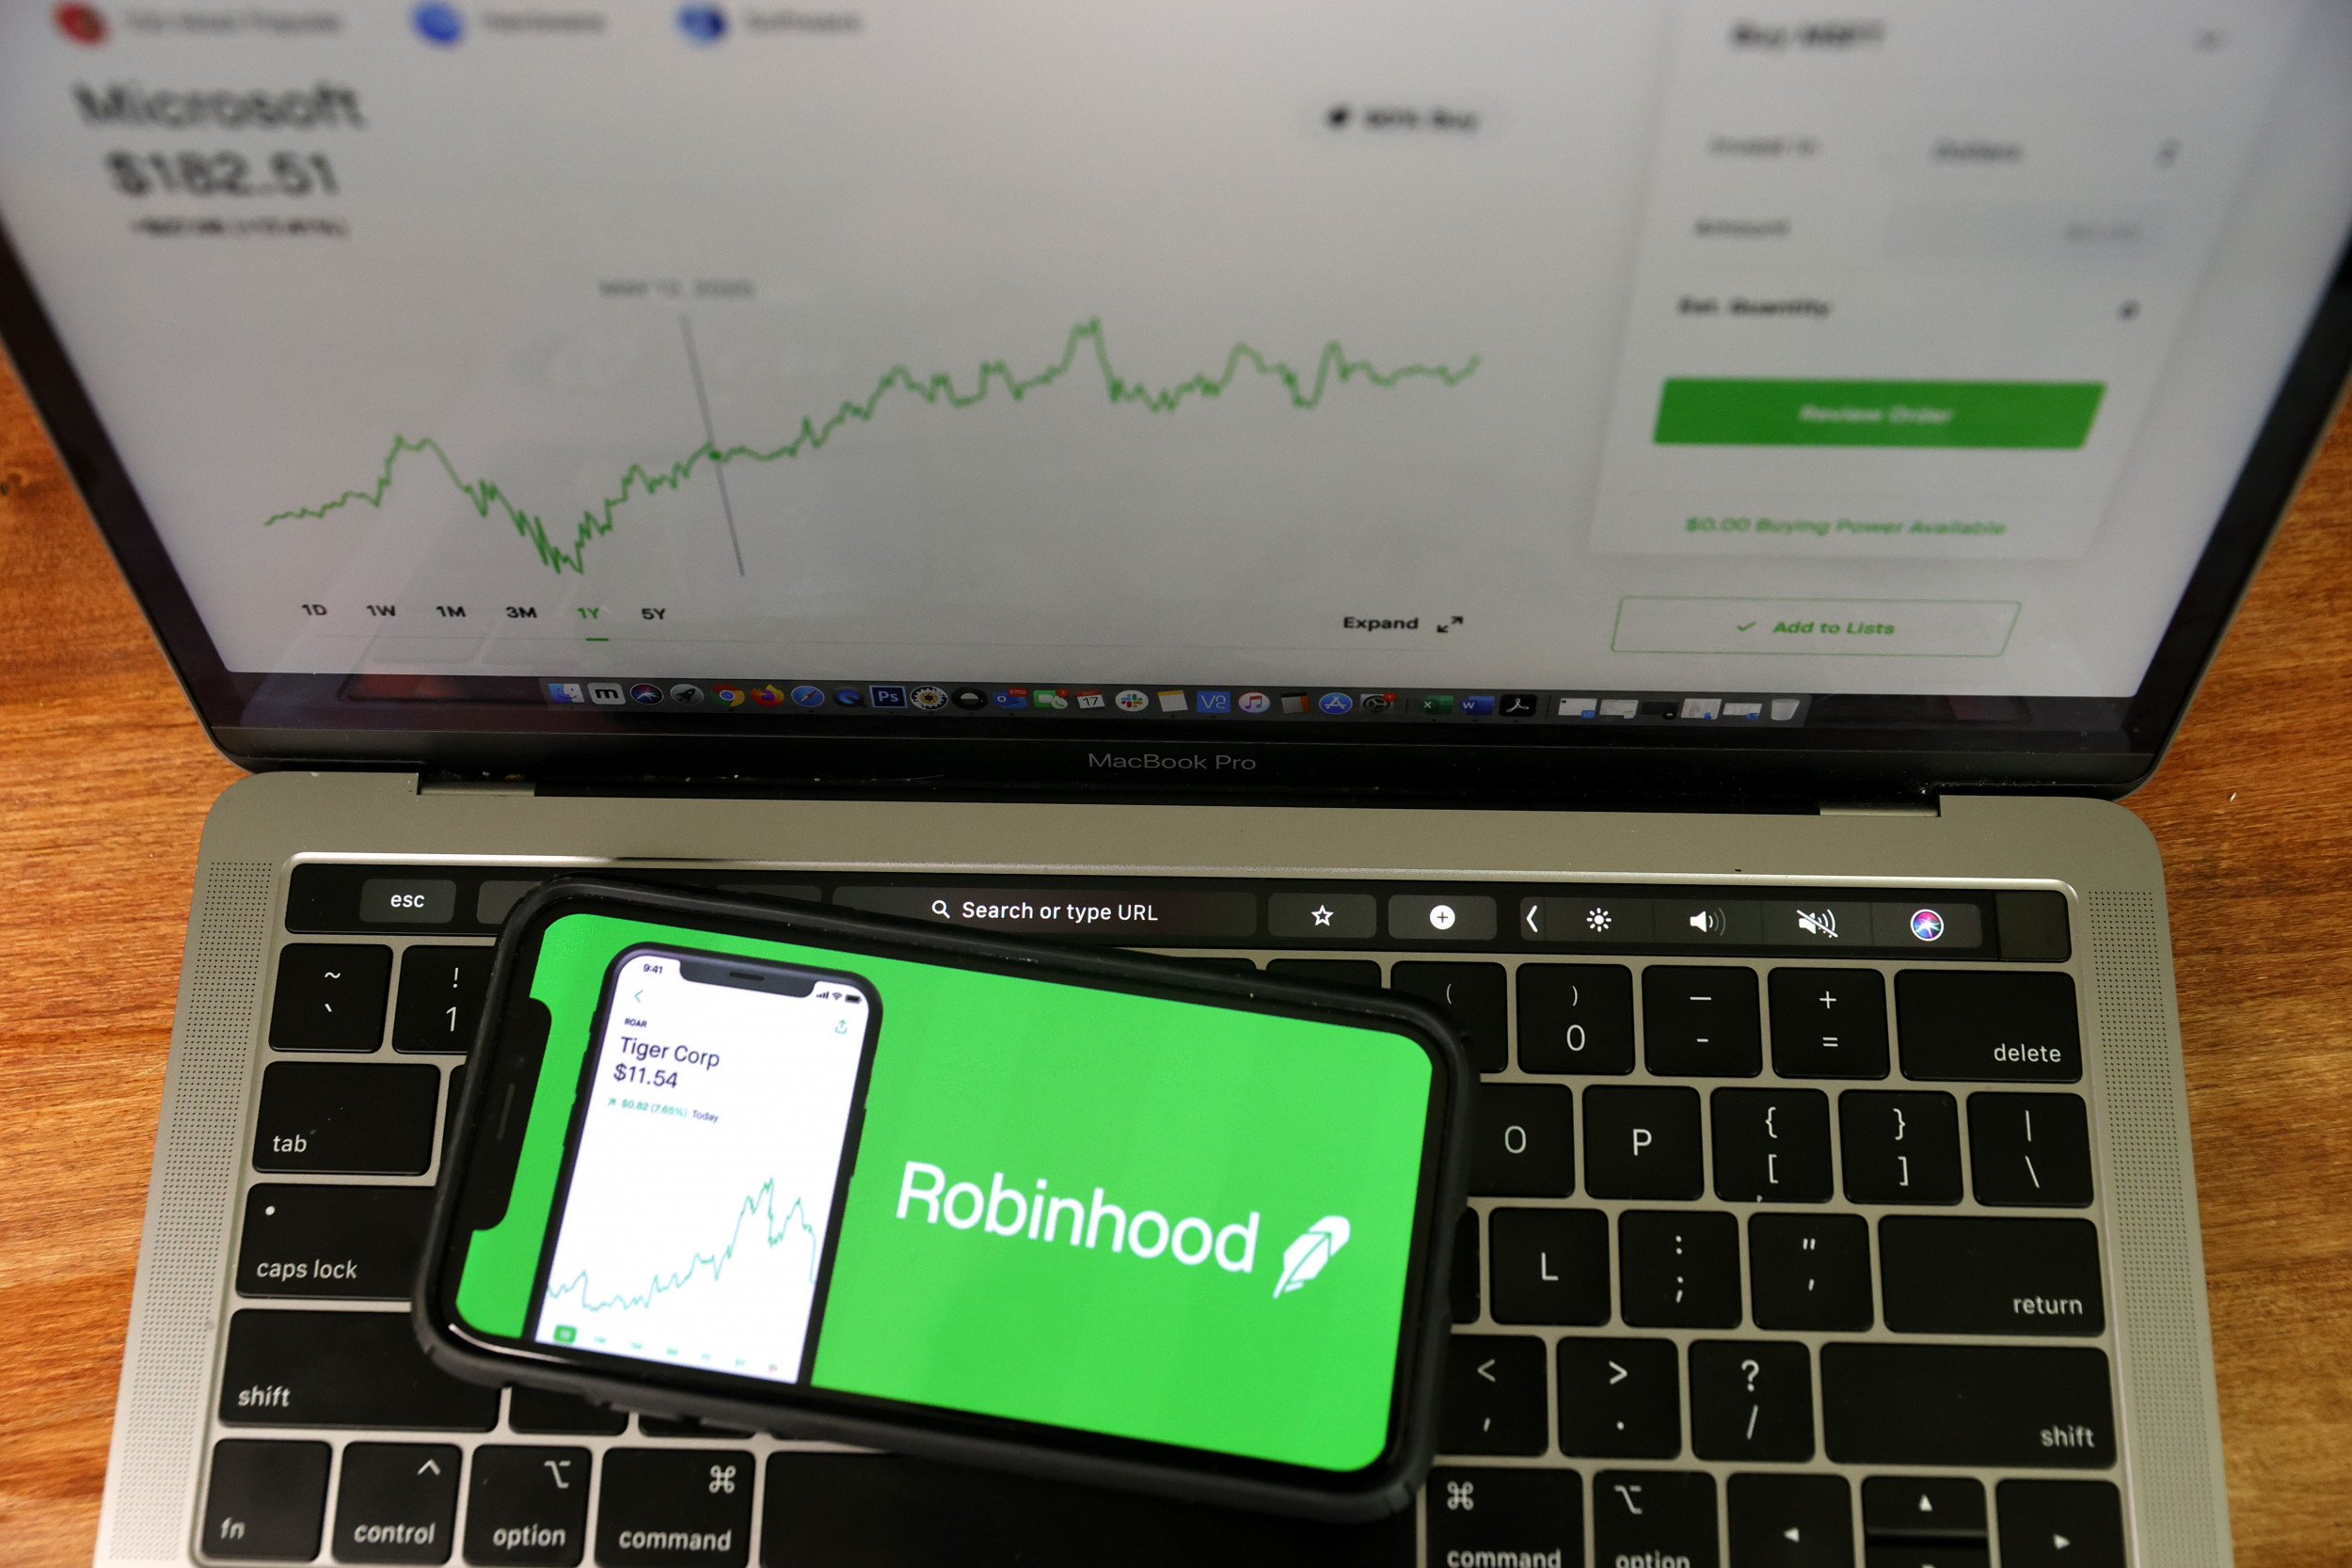 what is robinhood app